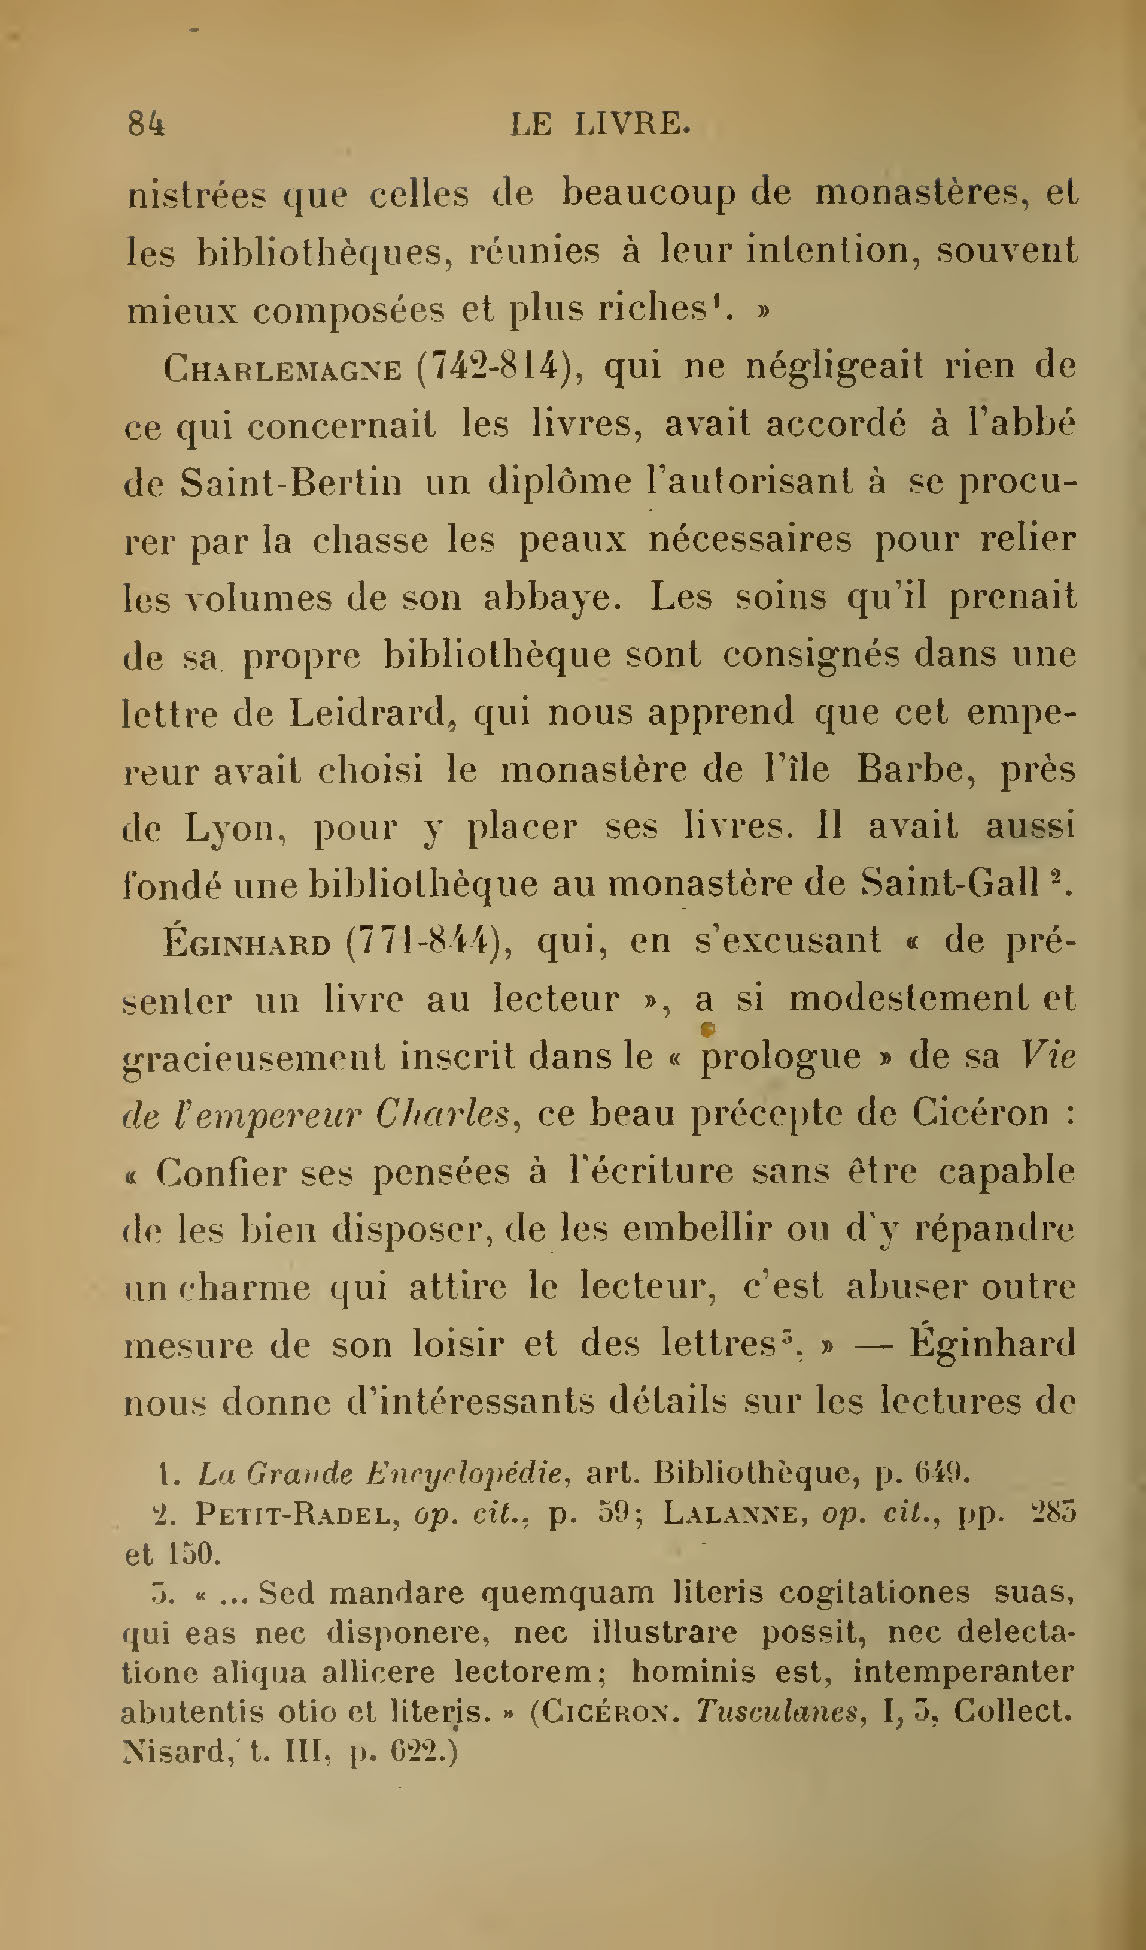 Albert Cim, Le Livre, t. I, p. 84.